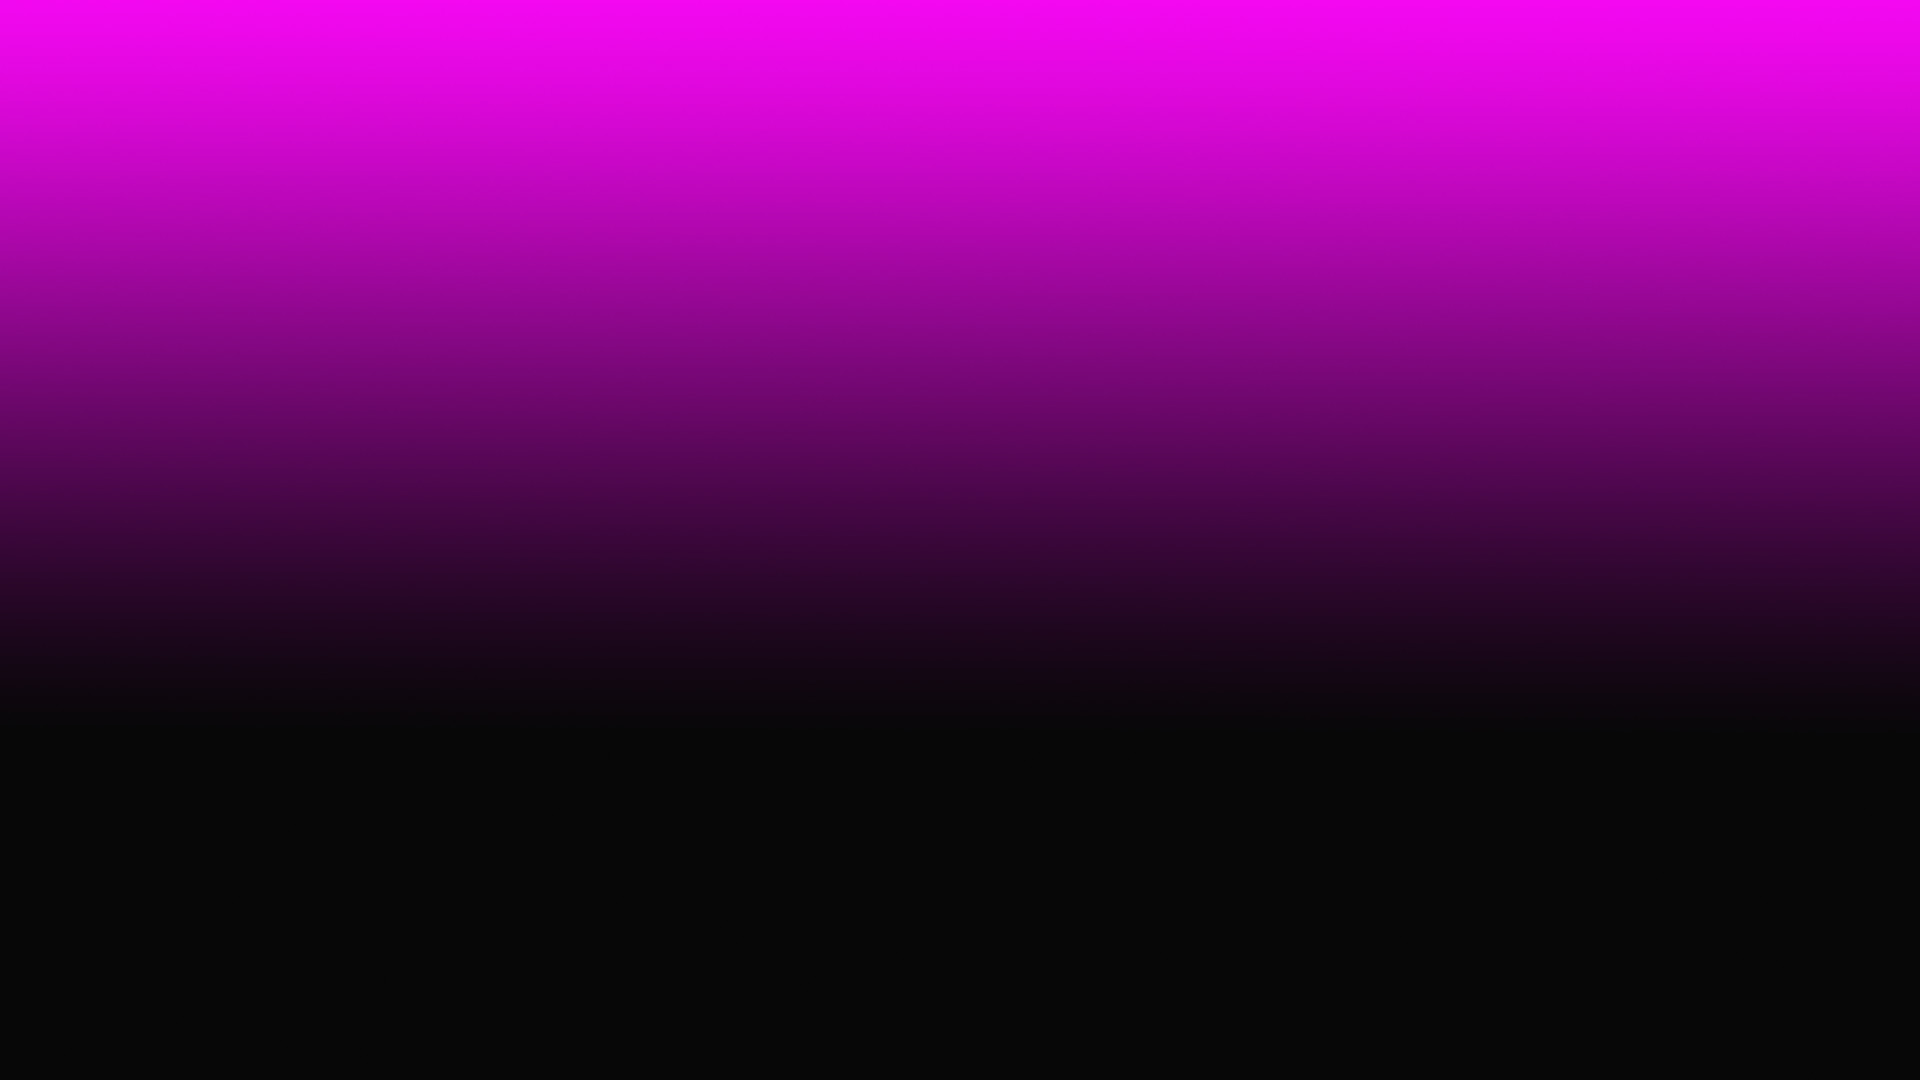 1920x1080 Black To Pink Gradient wallpaper - 865927